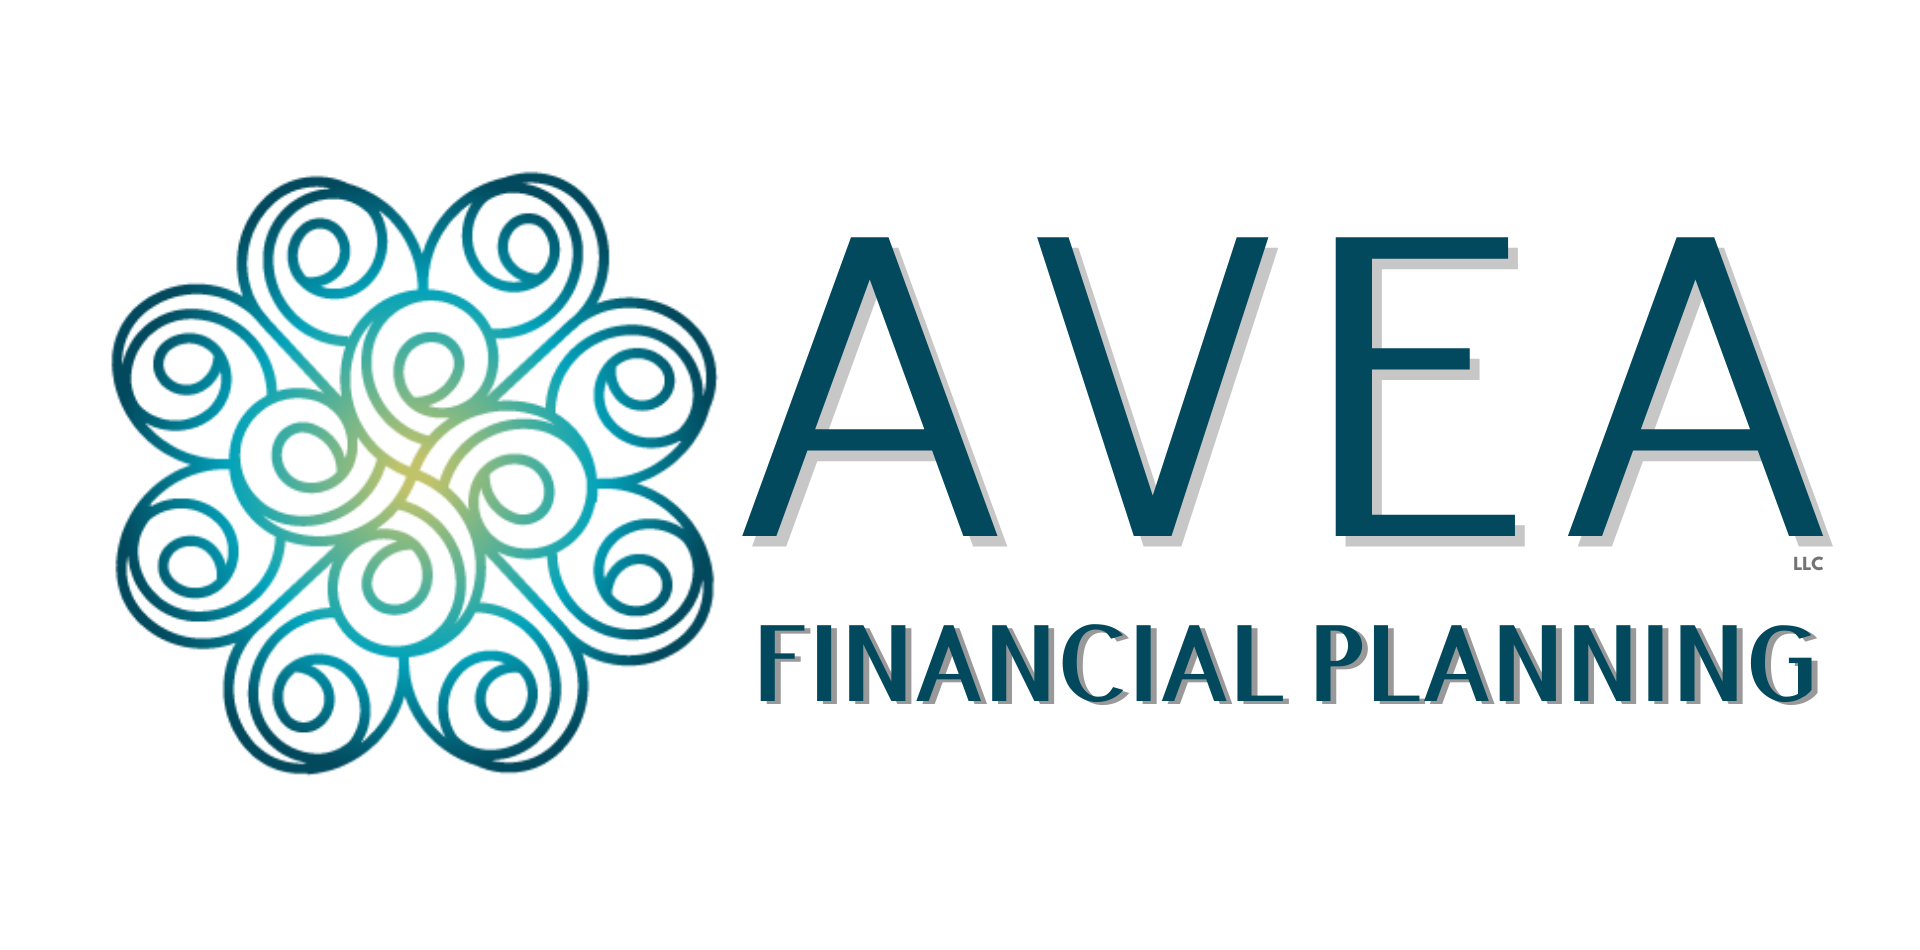 Avea Financial Planning, LLC